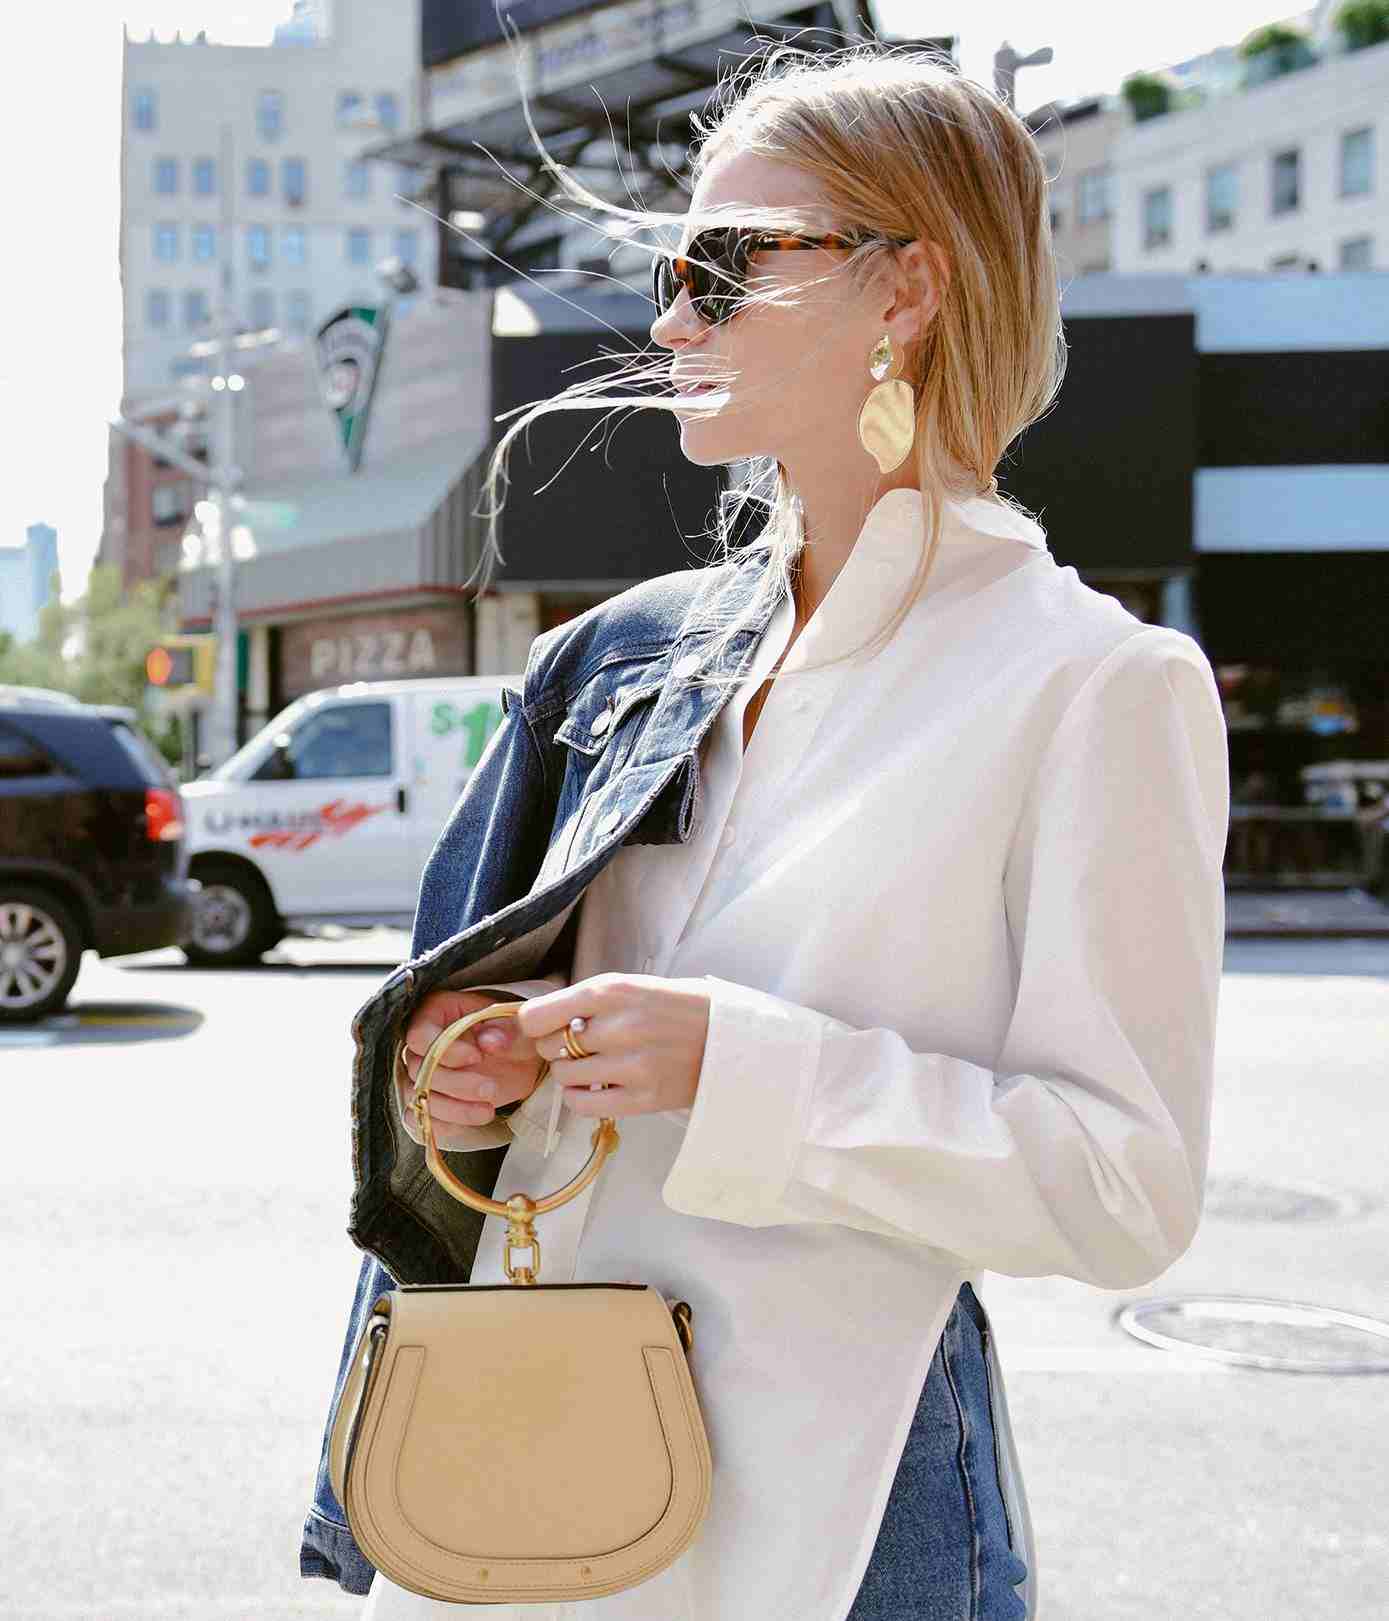 Bracelet Handbags Handbags Trends 2019 Denim Look Blonde Hair Shirt Blouse